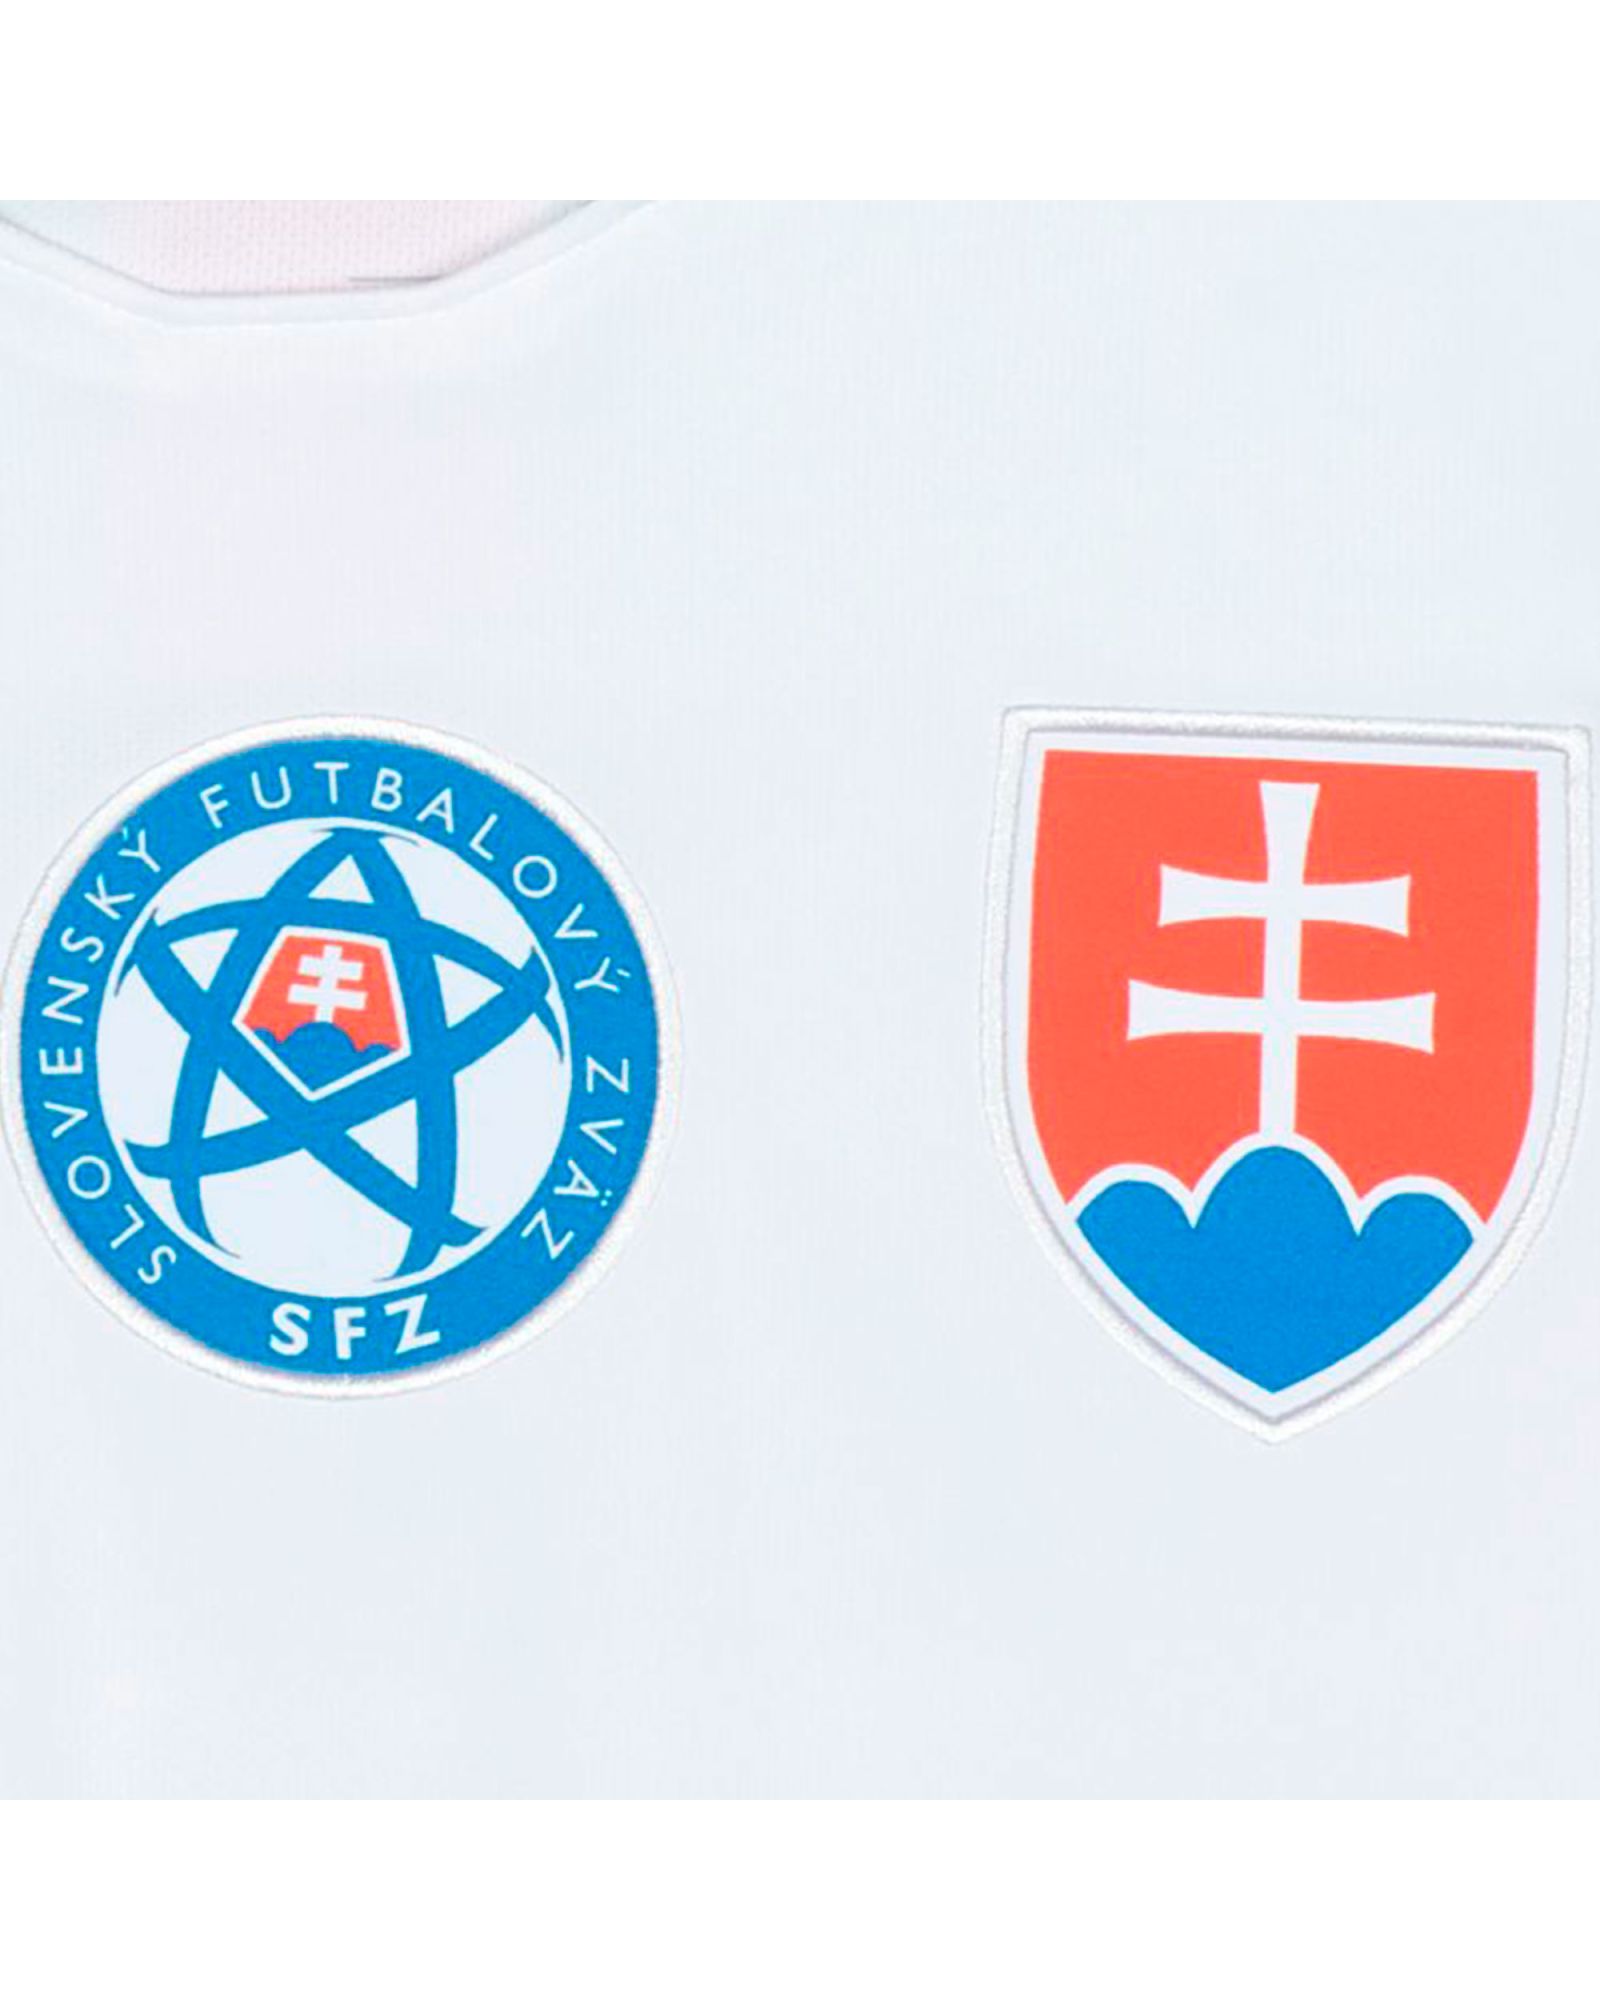 Camiseta 1ª Eslovaquia Mundial 2018 Blanco Azul - Fútbol Factory